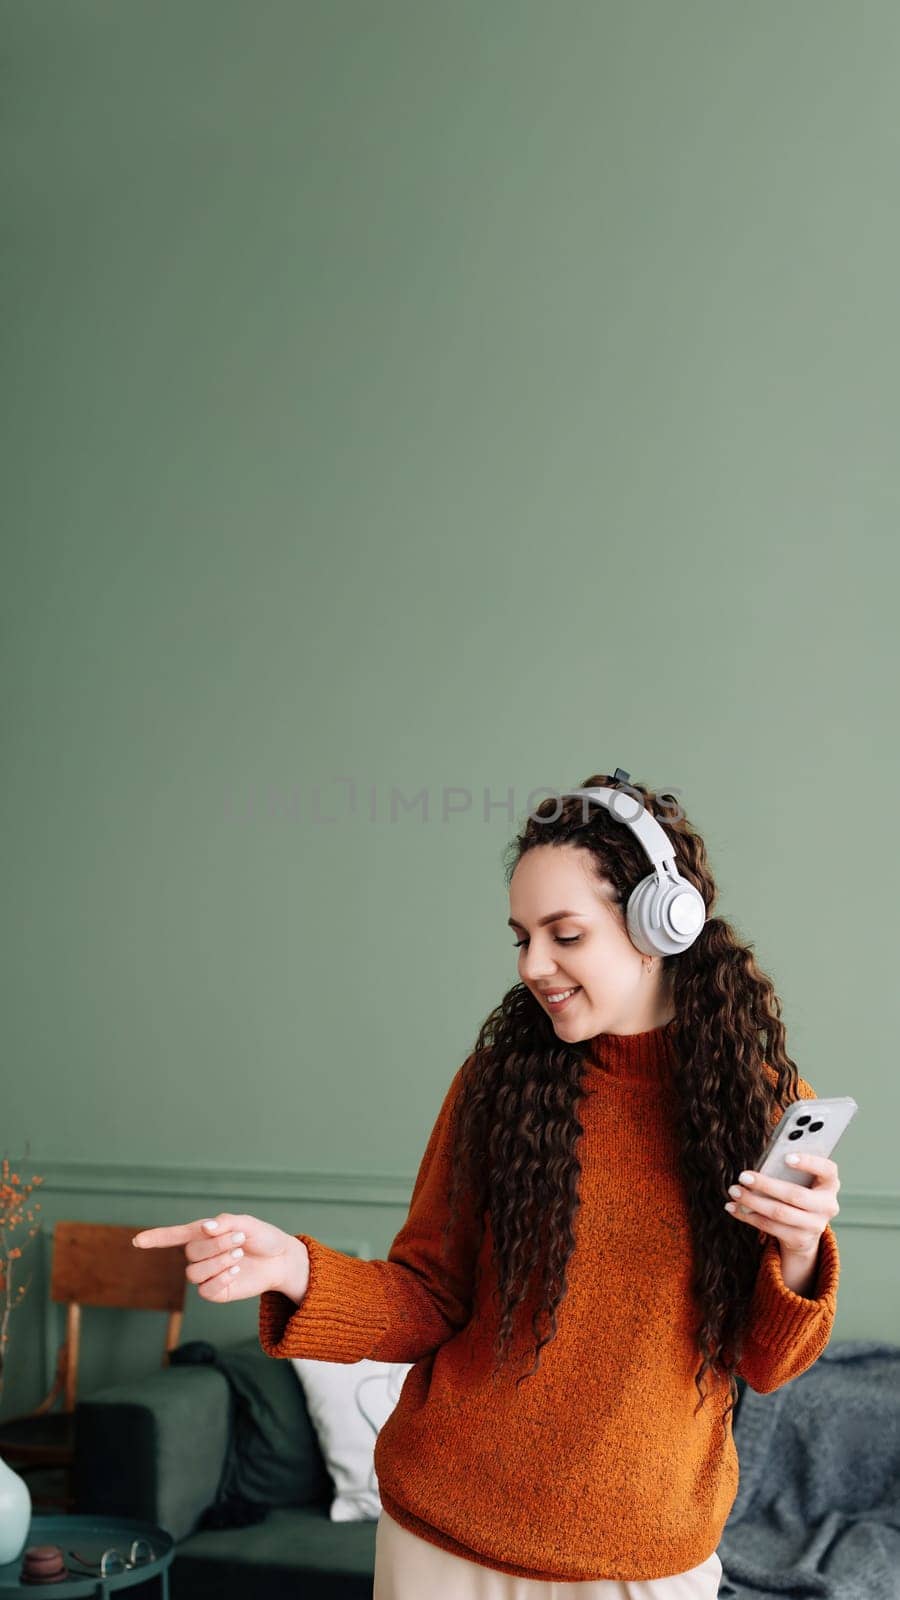 Enjoying the beats: woman dancing to music on phone with headphones in living room. Happy woman dancing while listening to music on smartphone with headphones